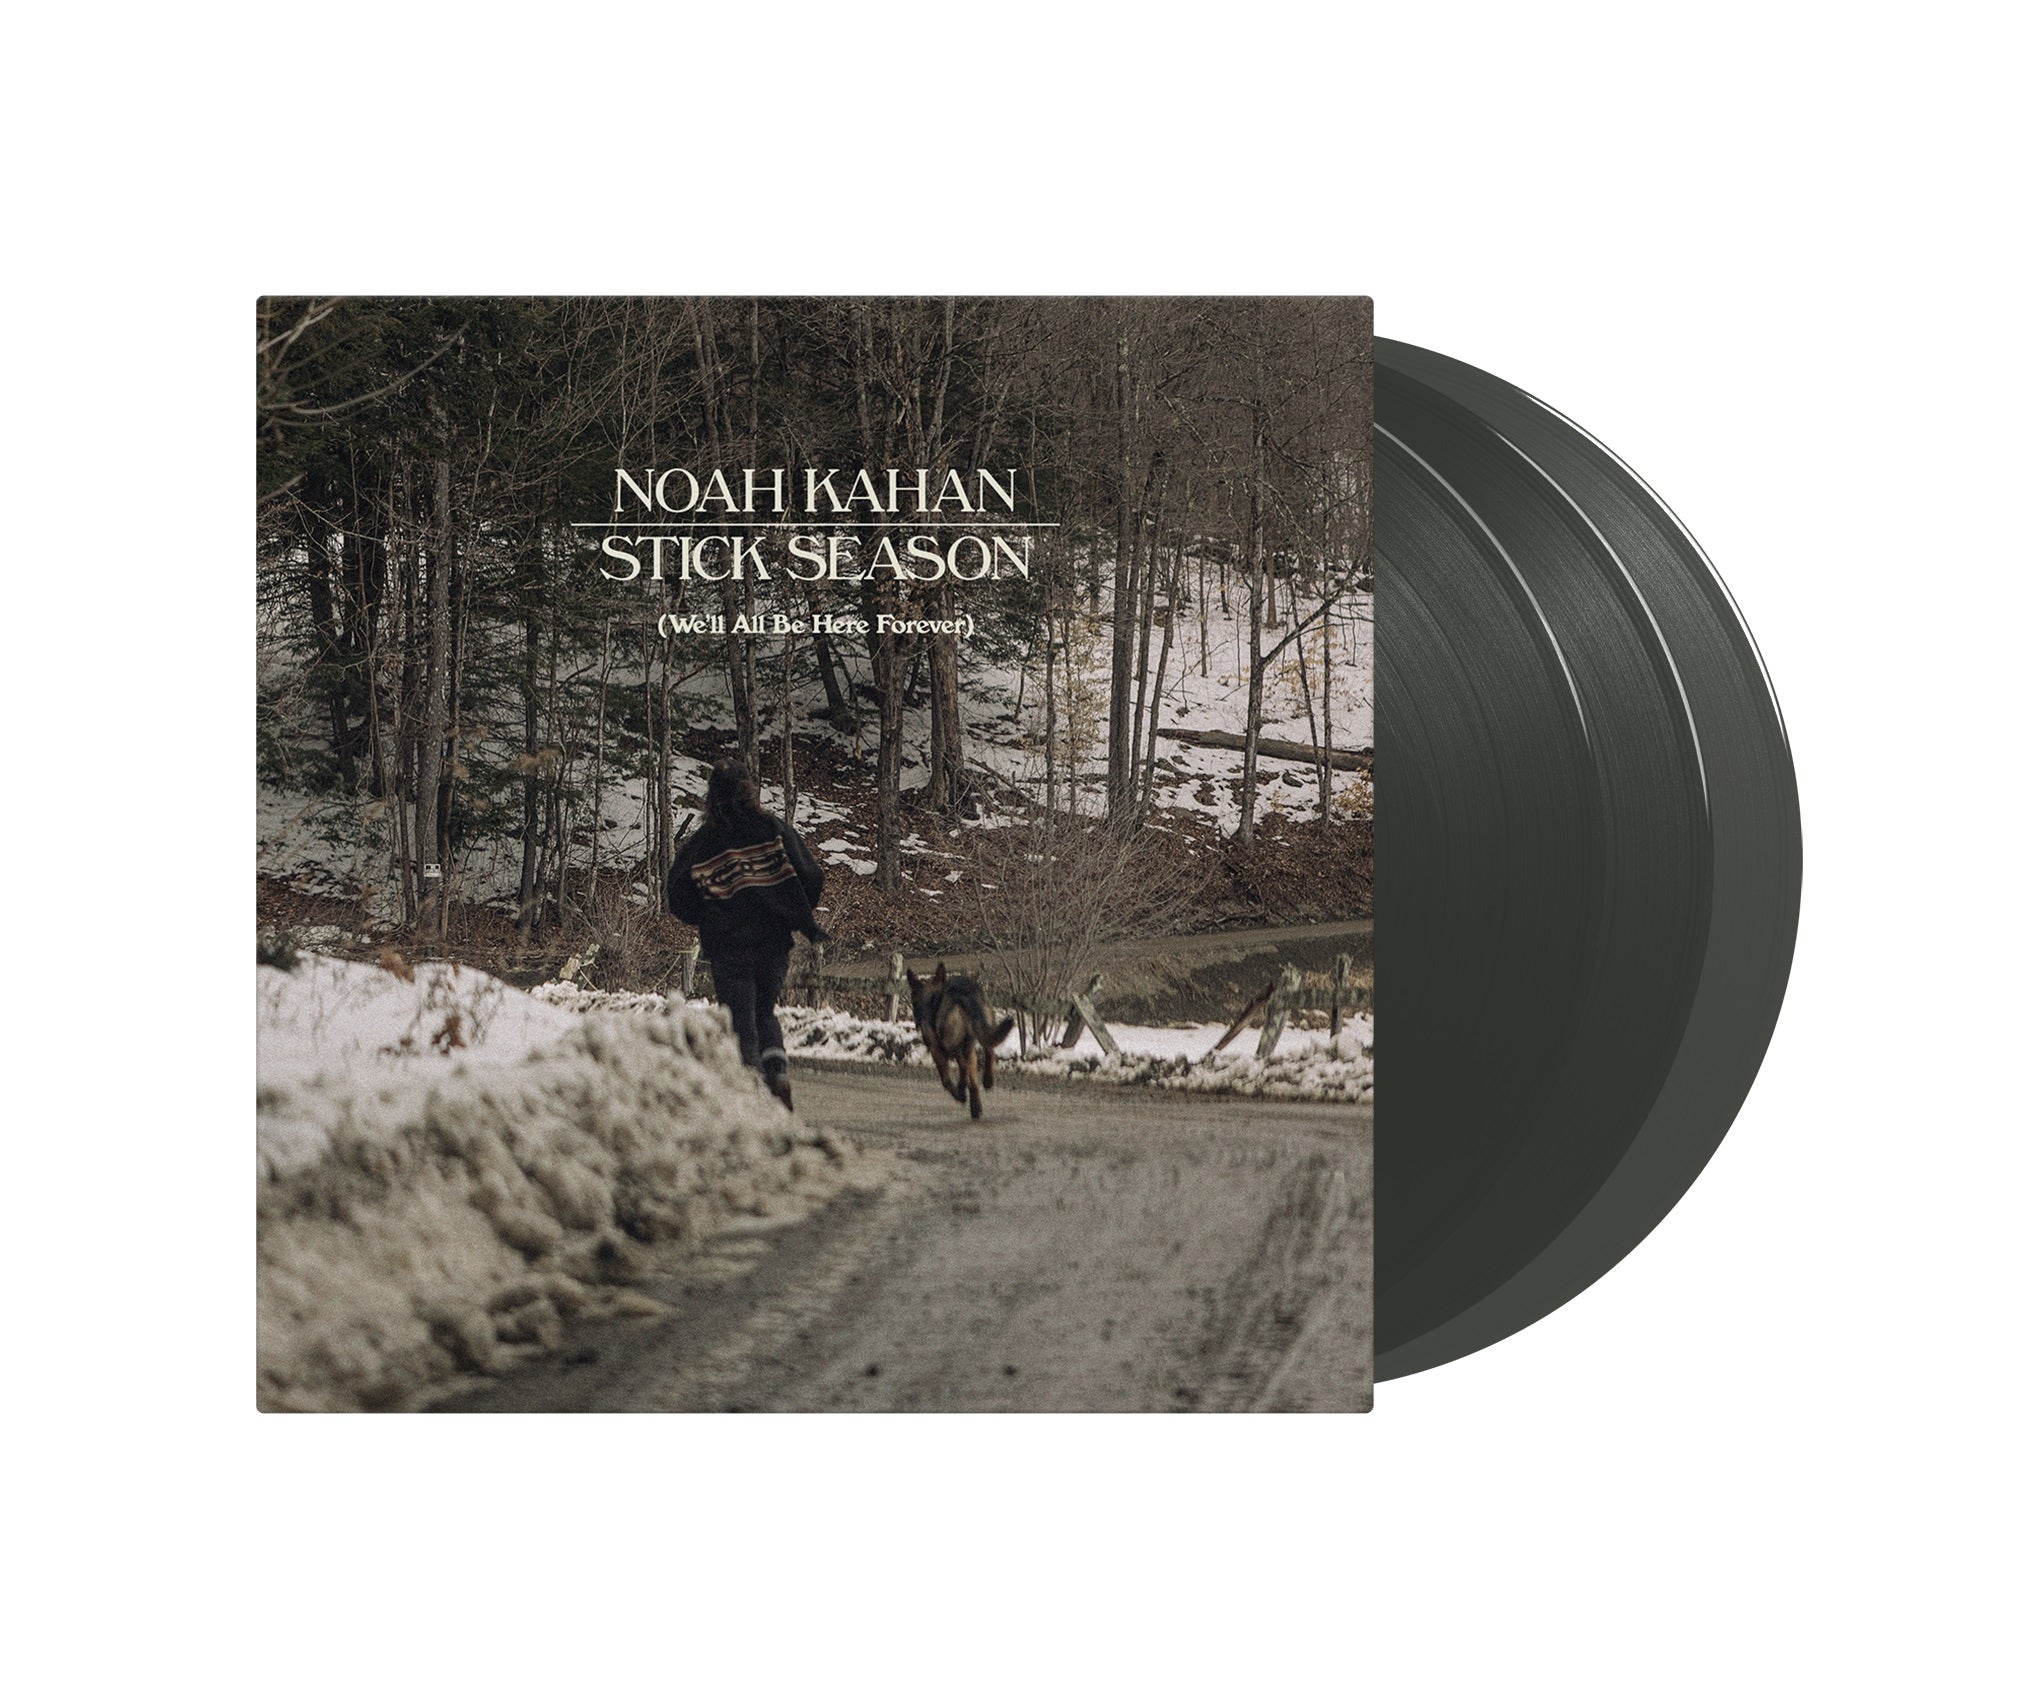 [DAMAGED] Noah Kahan - Stick Season (We'll All Be Here Forever) [3-lp Black Ice Vinyl]